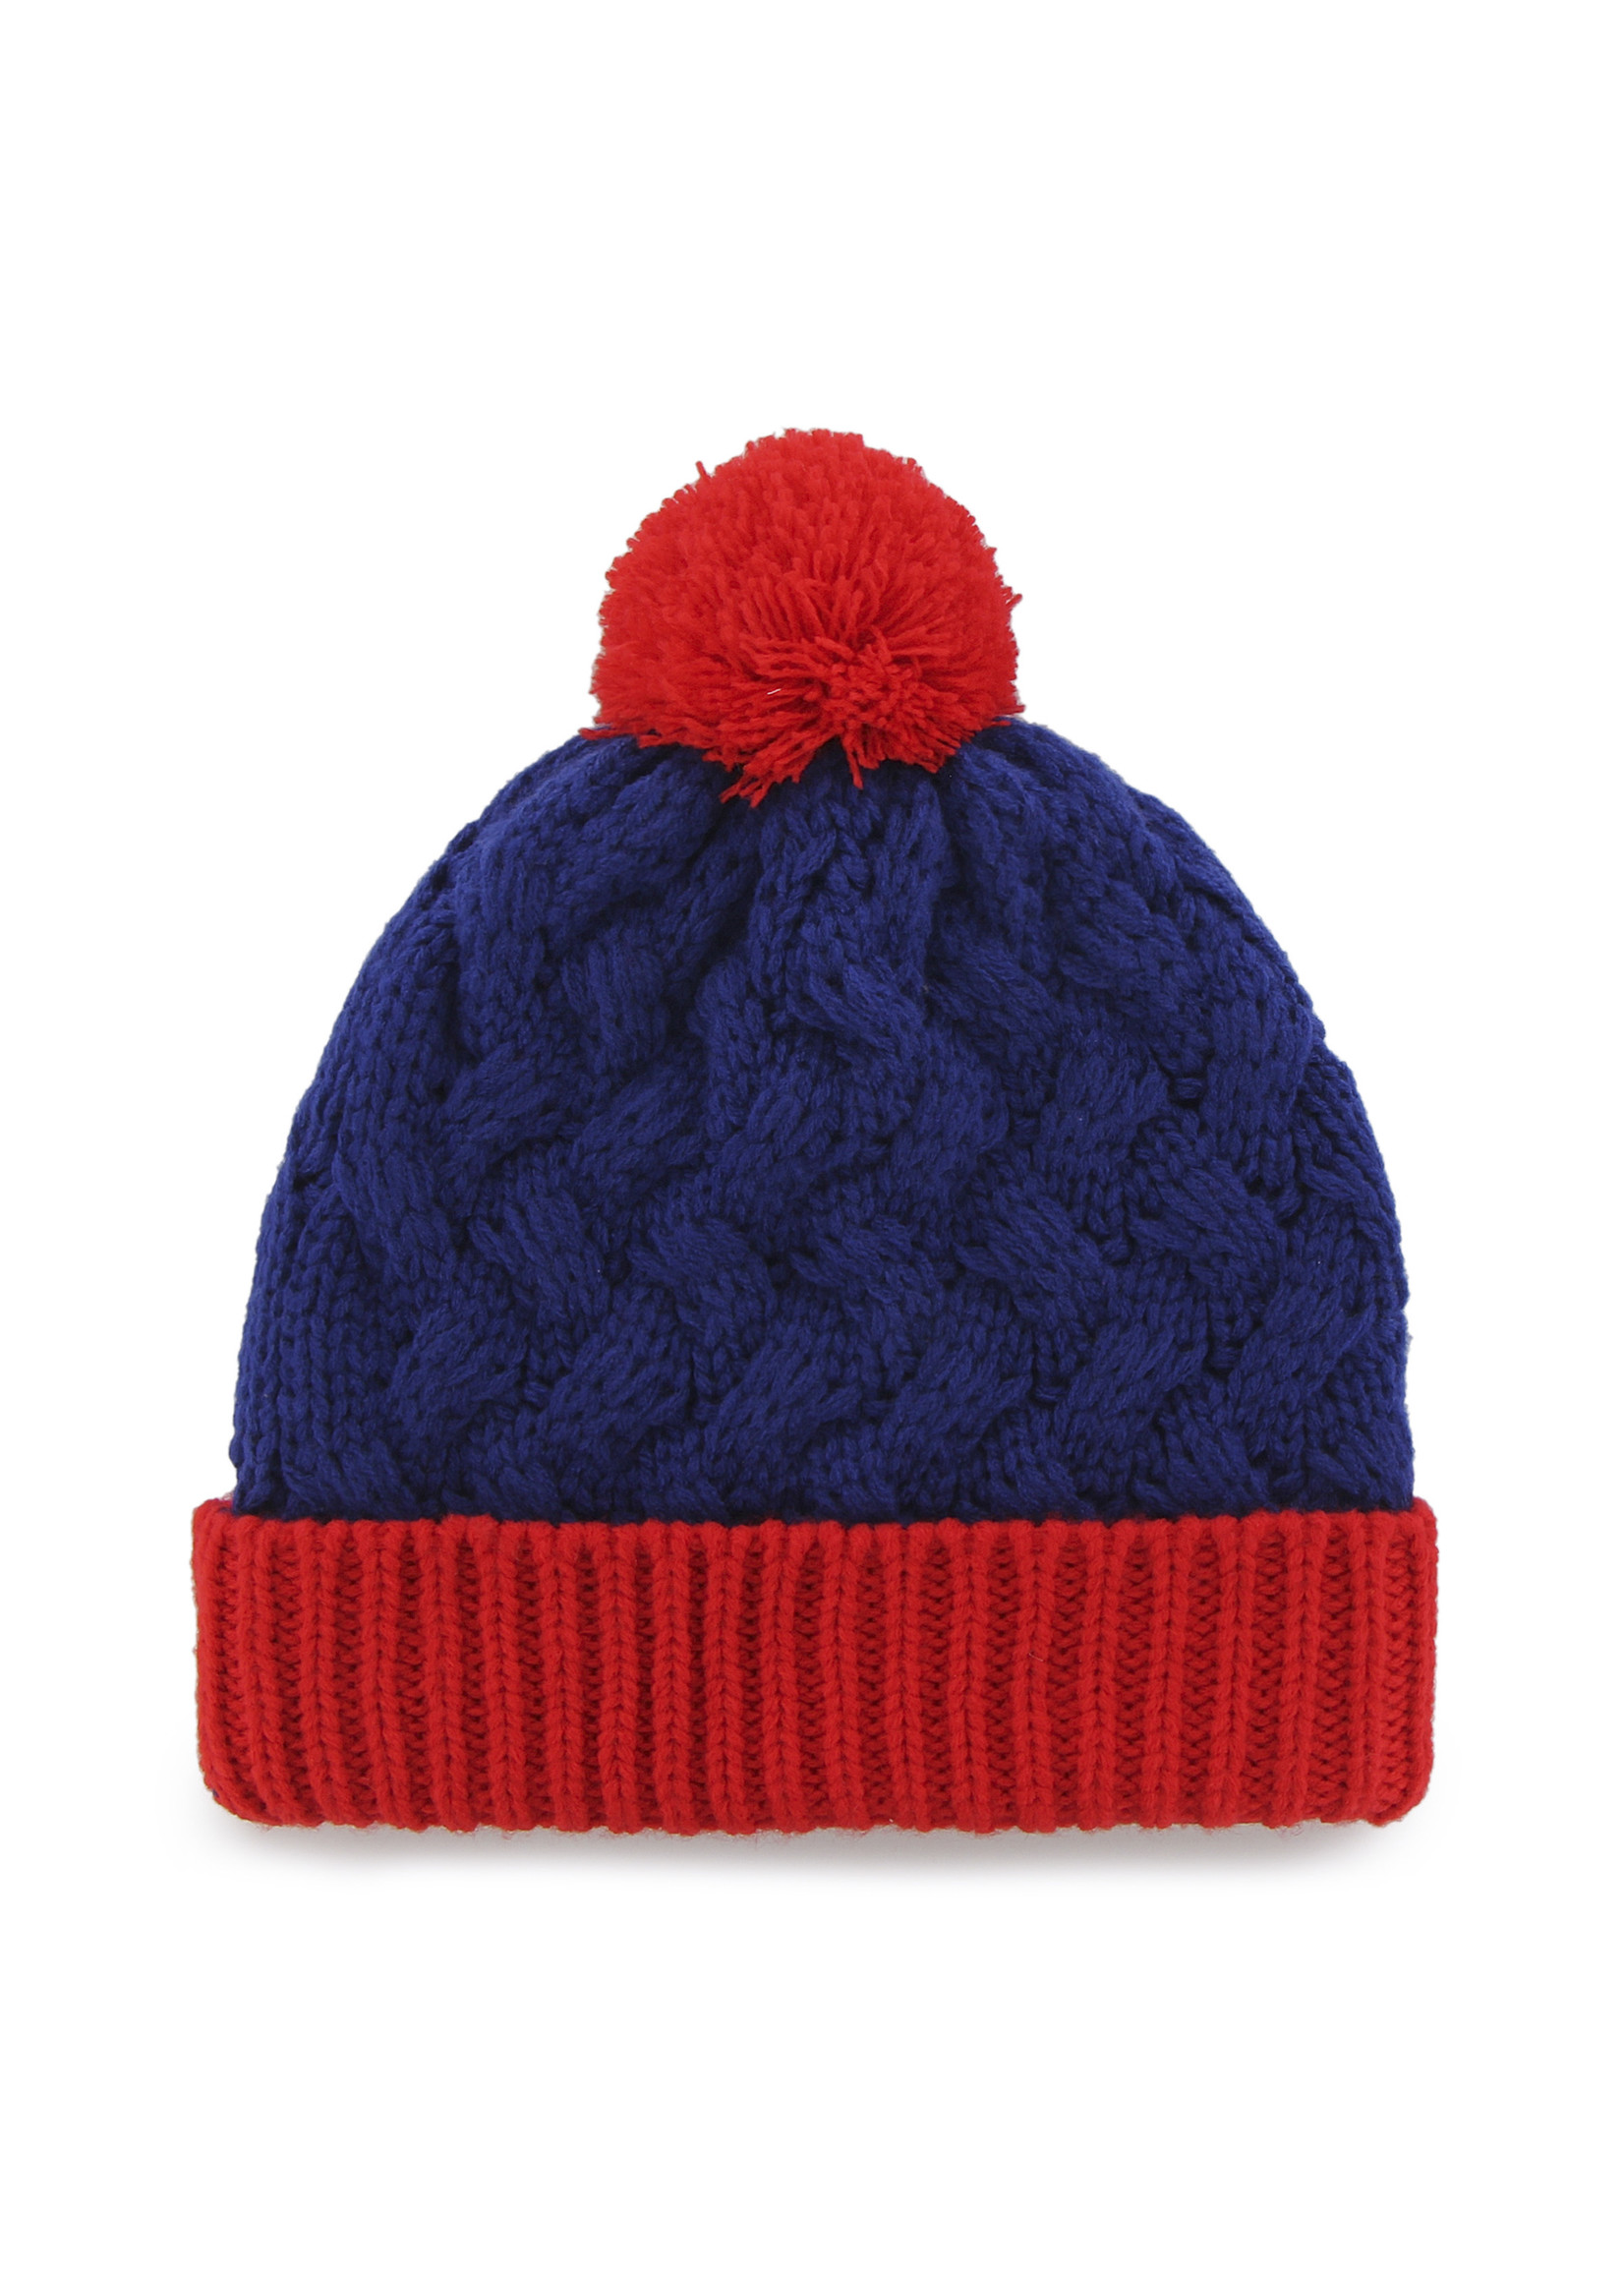 '47 Brand Patriots Women's Winter Hat - Royal/Red